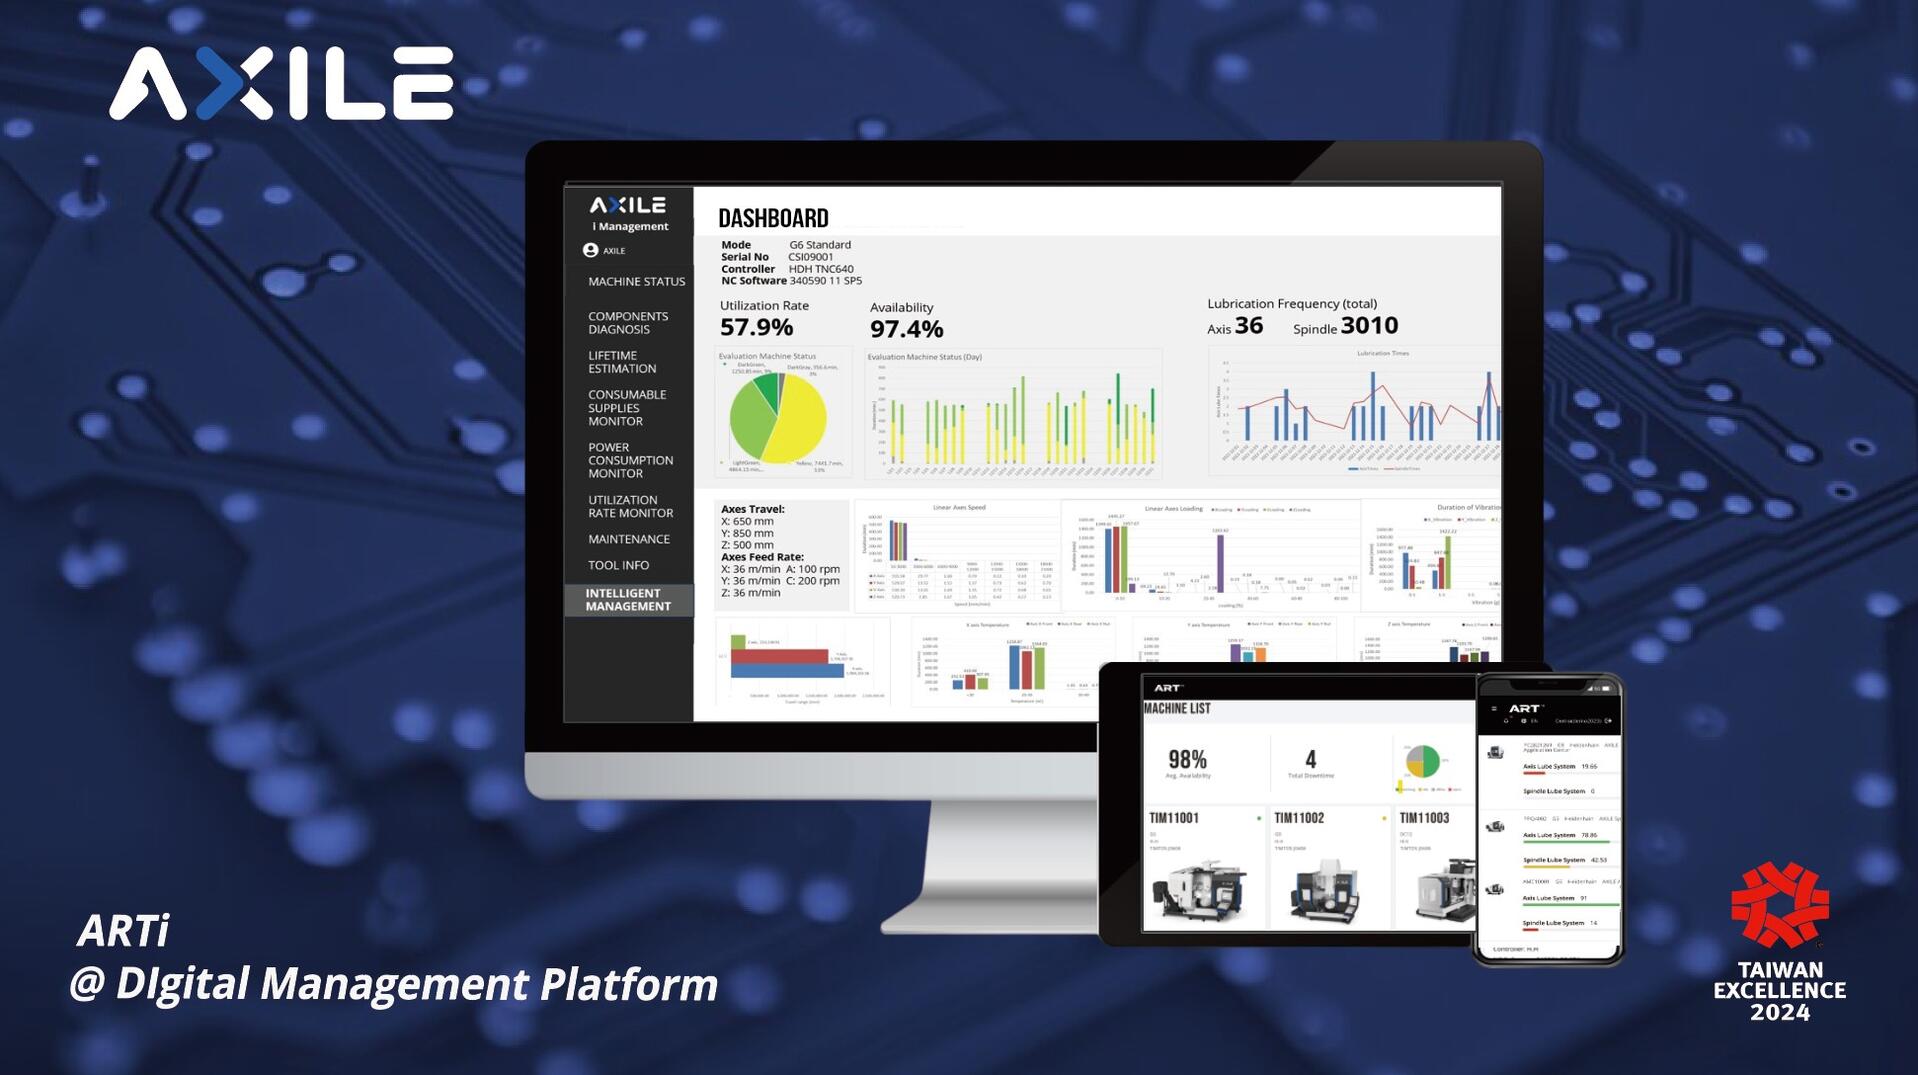 AXILE Digital Platform based on i4.0